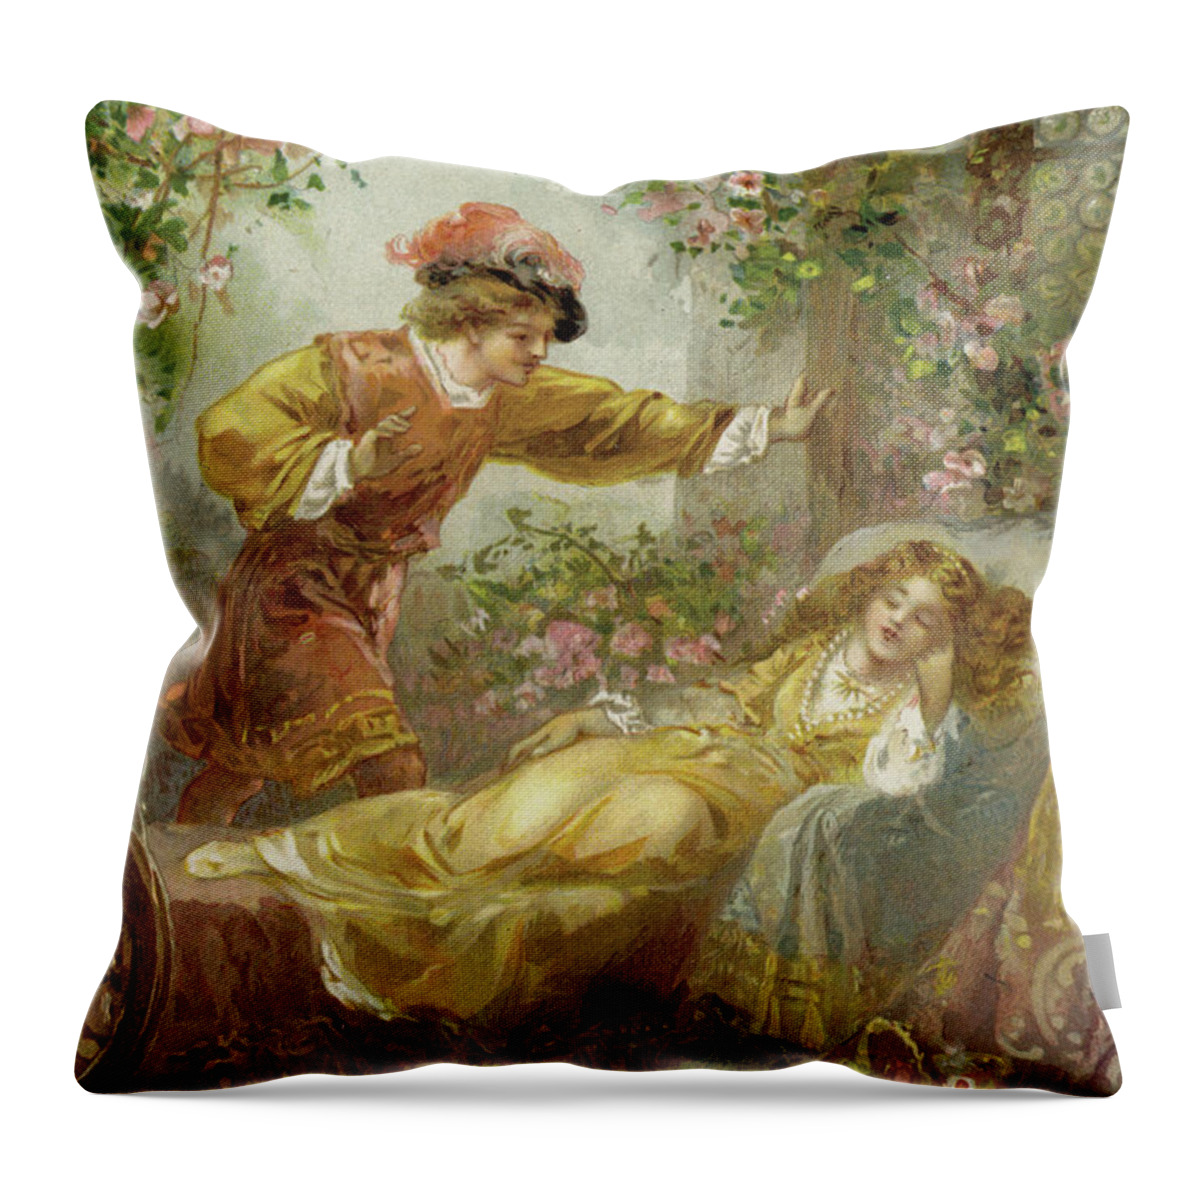 Sleeping Beauty Throw Pillow featuring the painting The Prince finds the Sleeping Beauty by English School